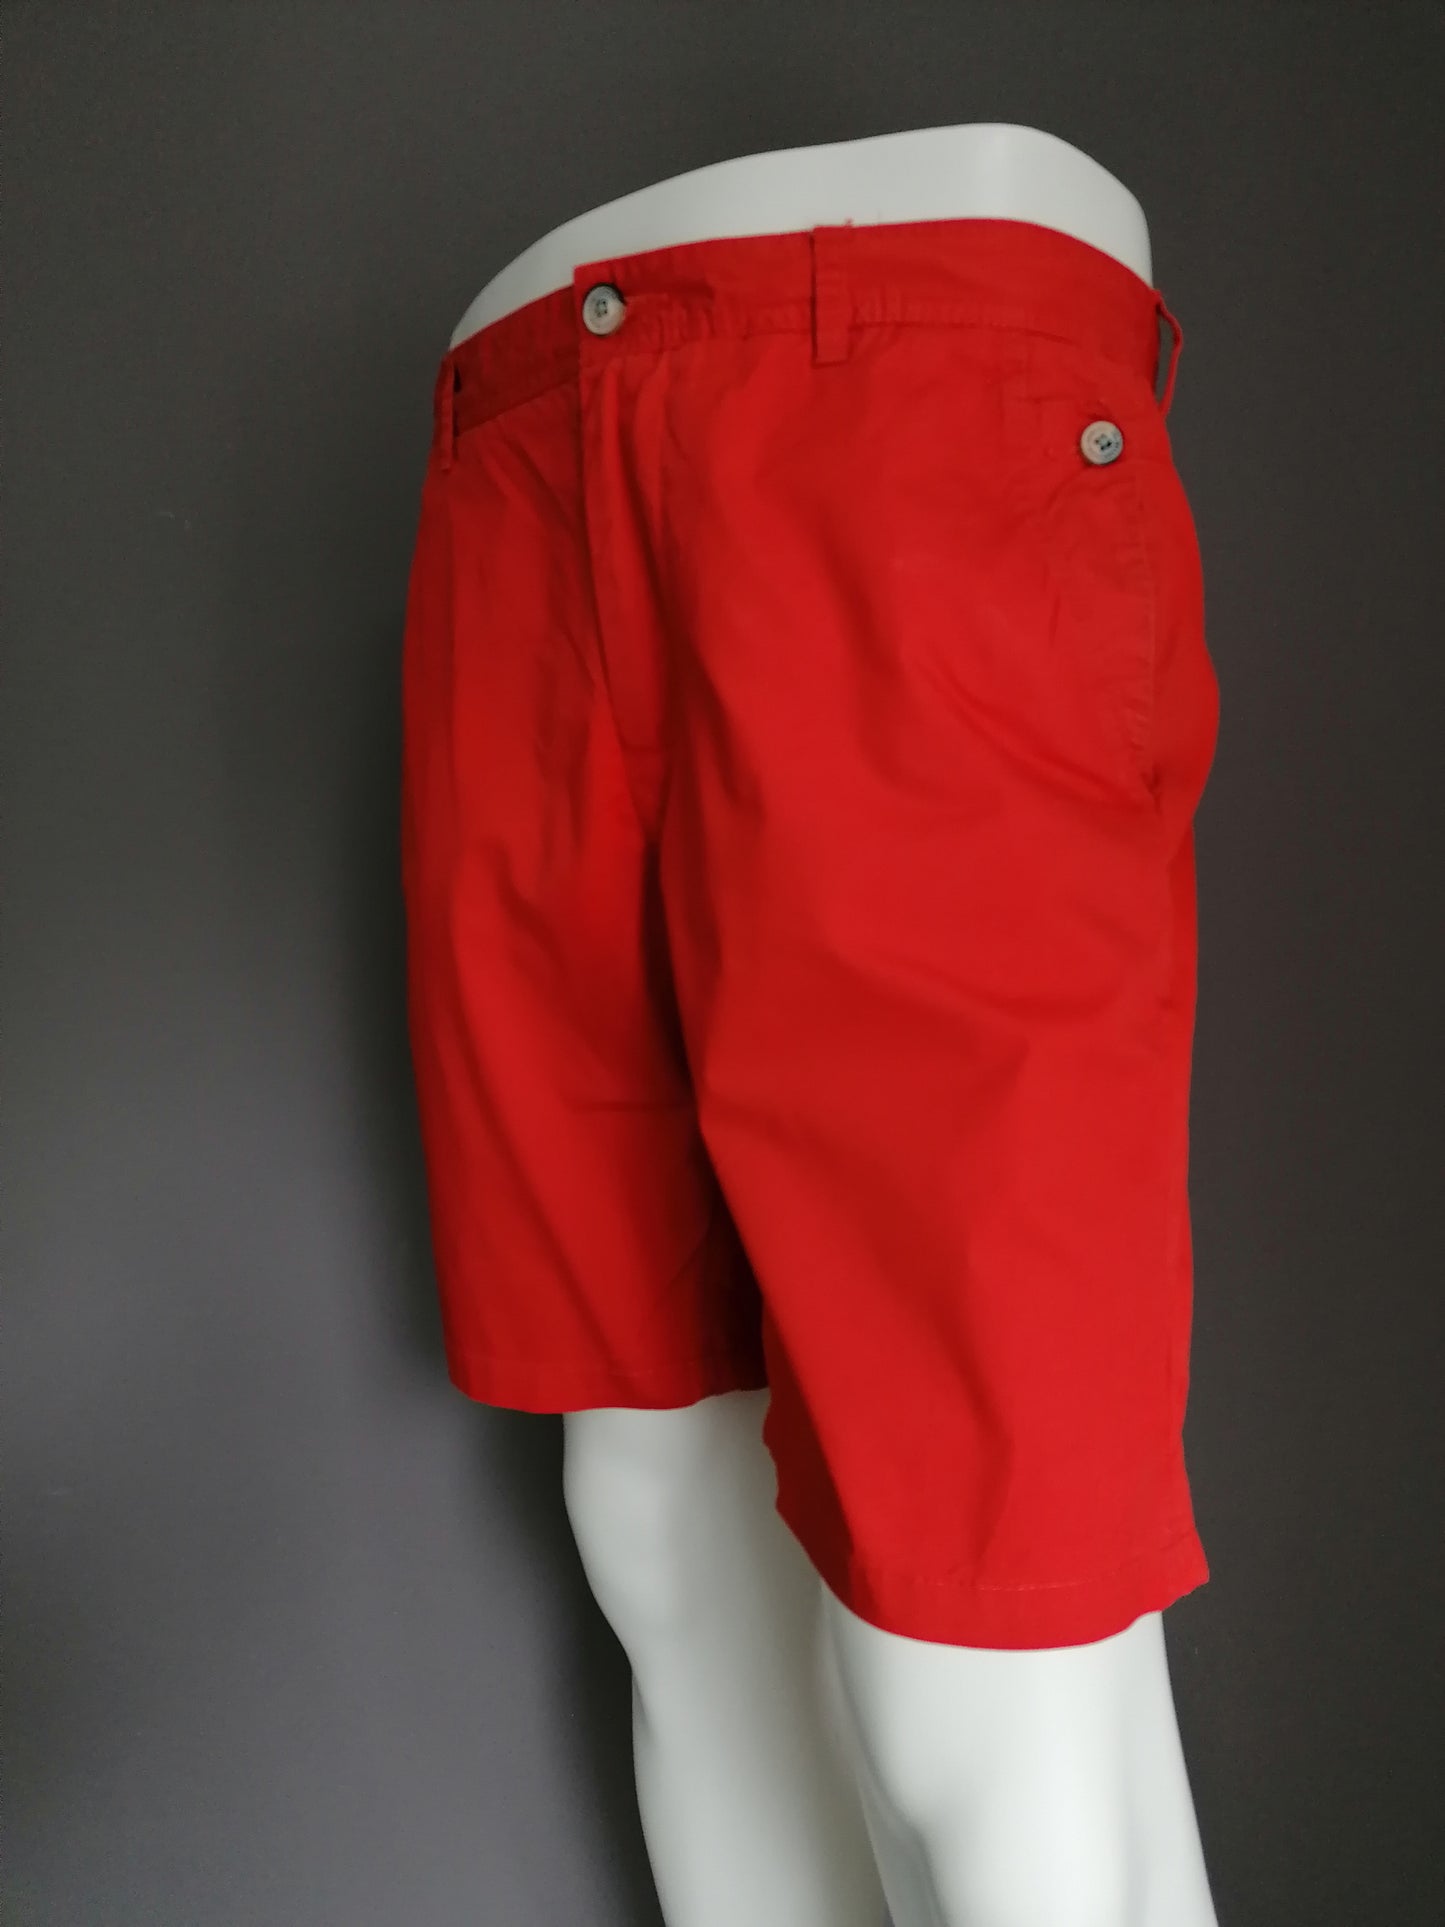 Pantalones cortos de hombre zara. Naranja coloreada. Tamaño W34